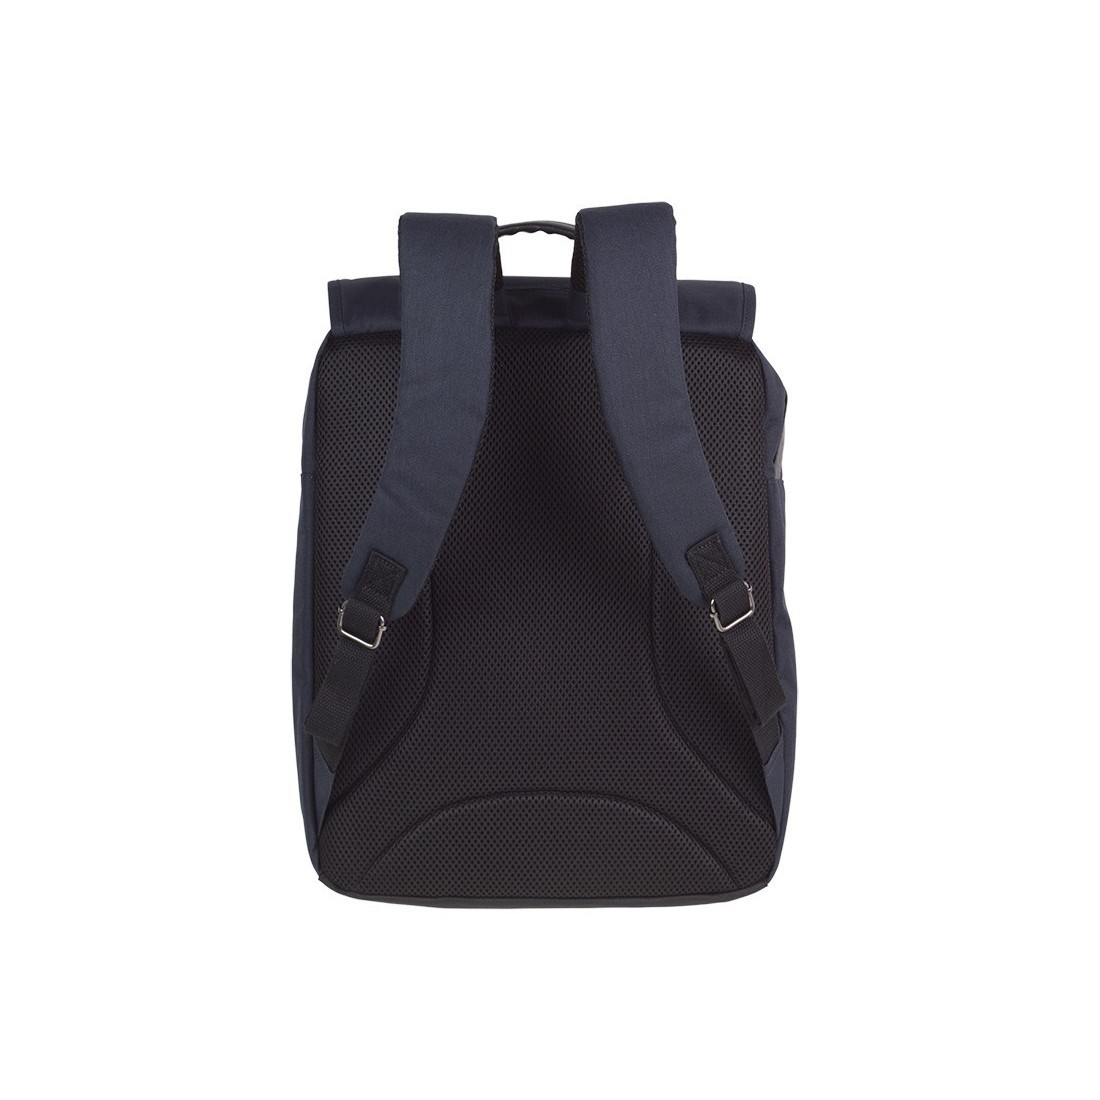 Plecak miejski CoolPack CP TRAFFIC BLACK czarny retro kieszeń na laptop - A132 - plecak-tornister.pl